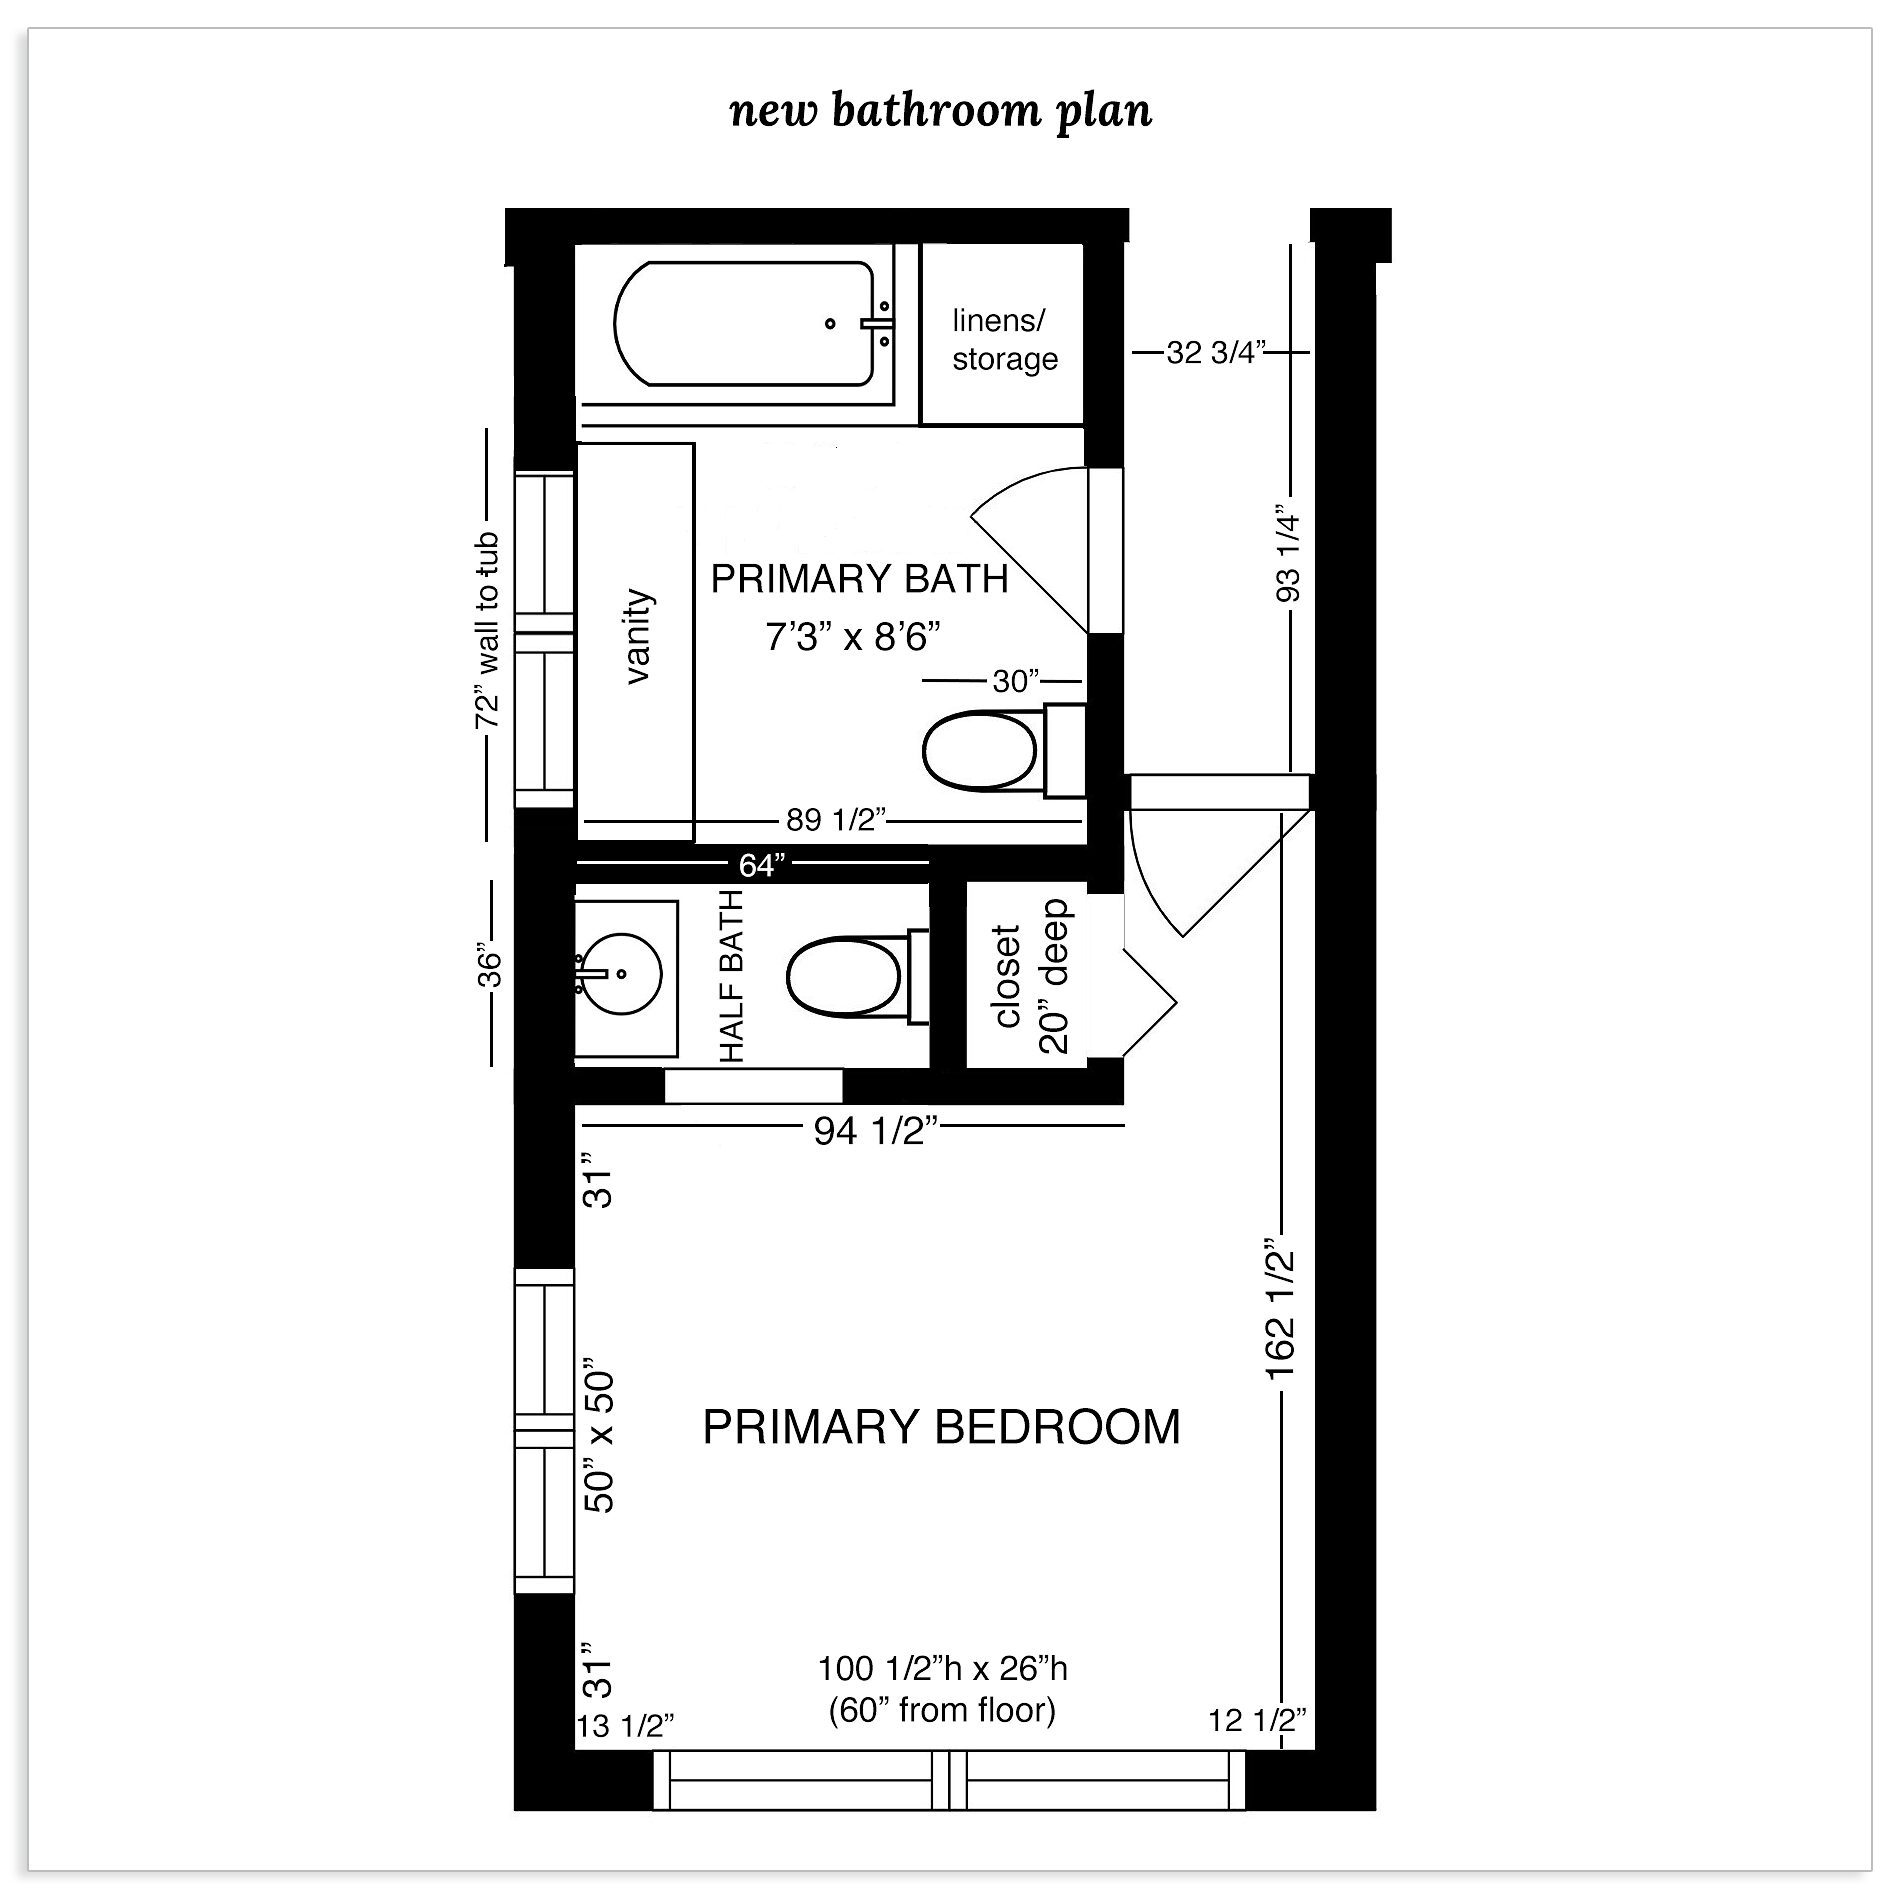 The new bathroom floorplan // via Yellow Brick Home